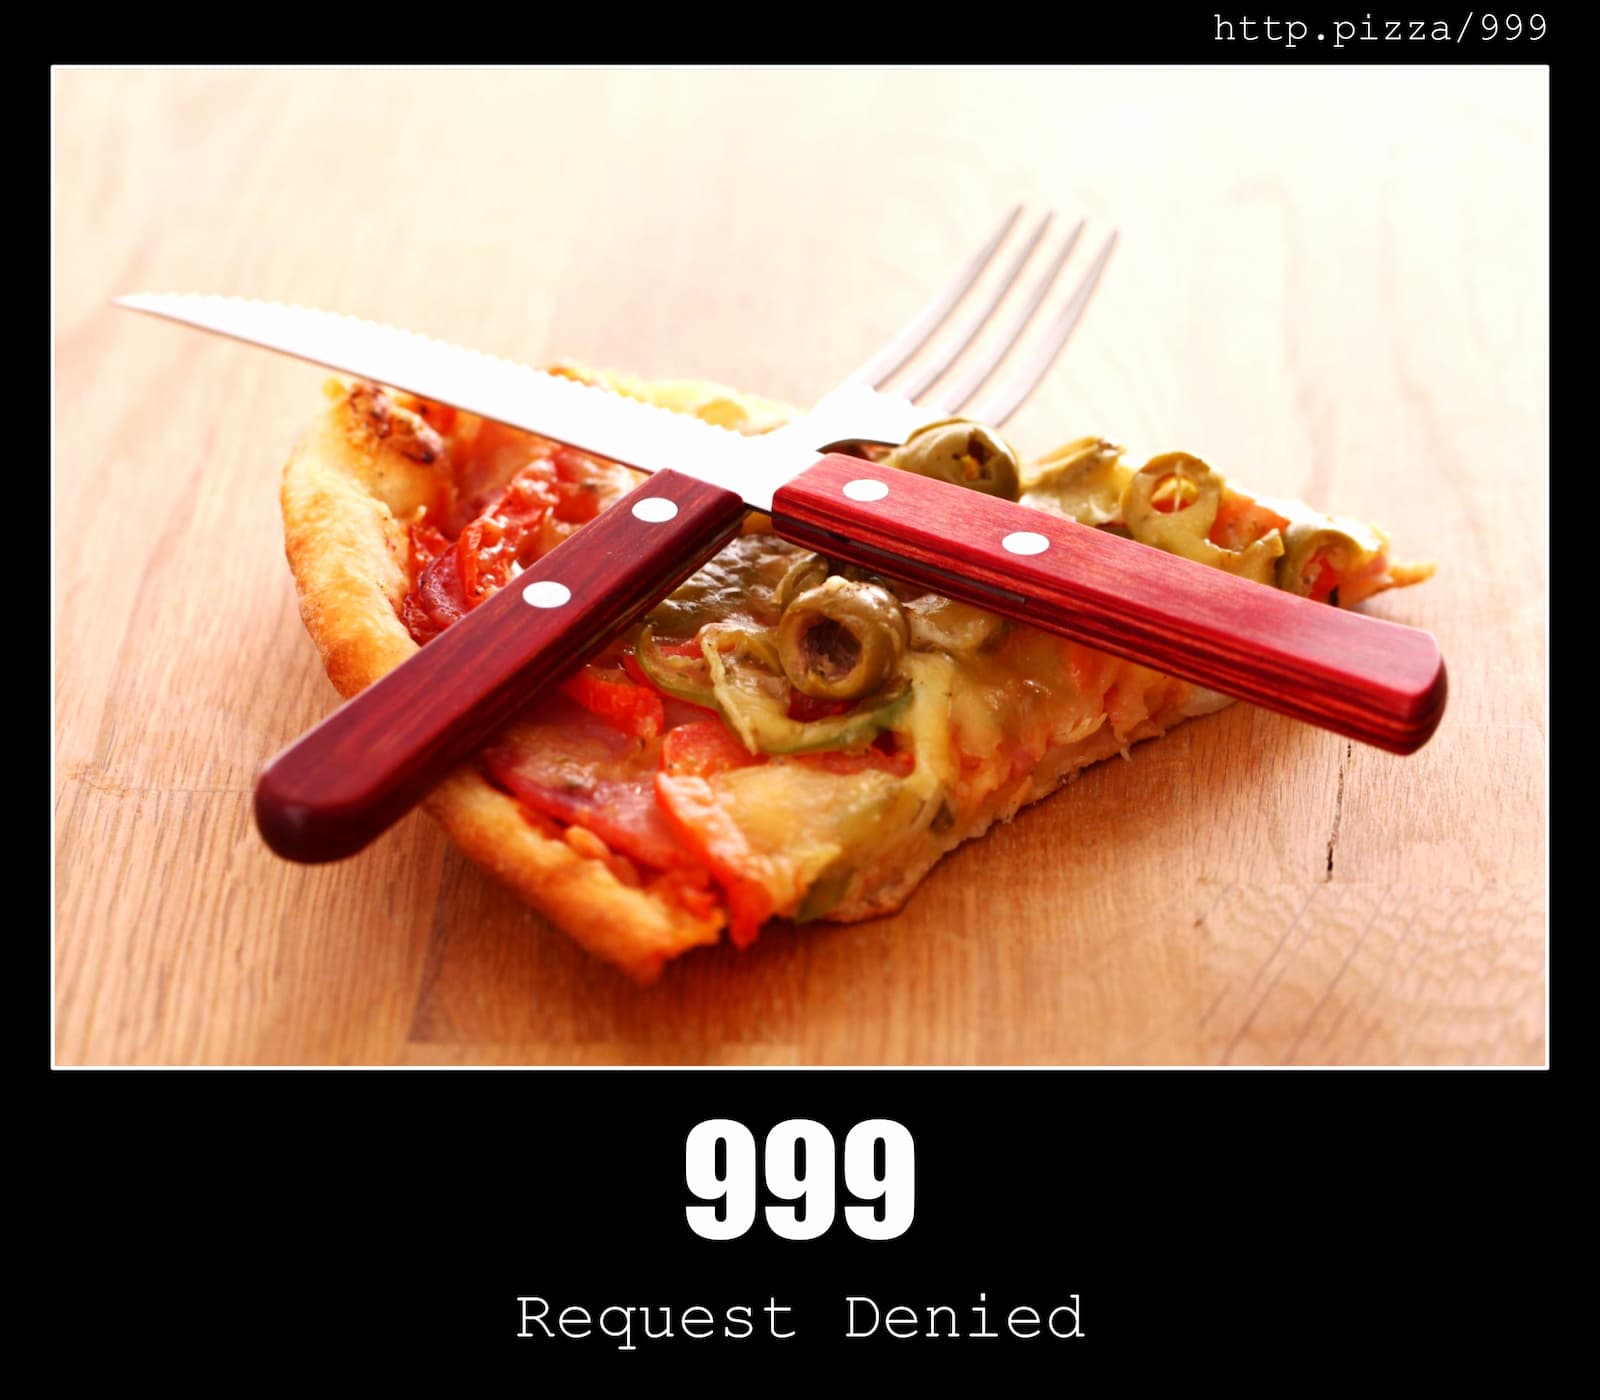 HTTP Status Code 999 Request Denied & Pizzas